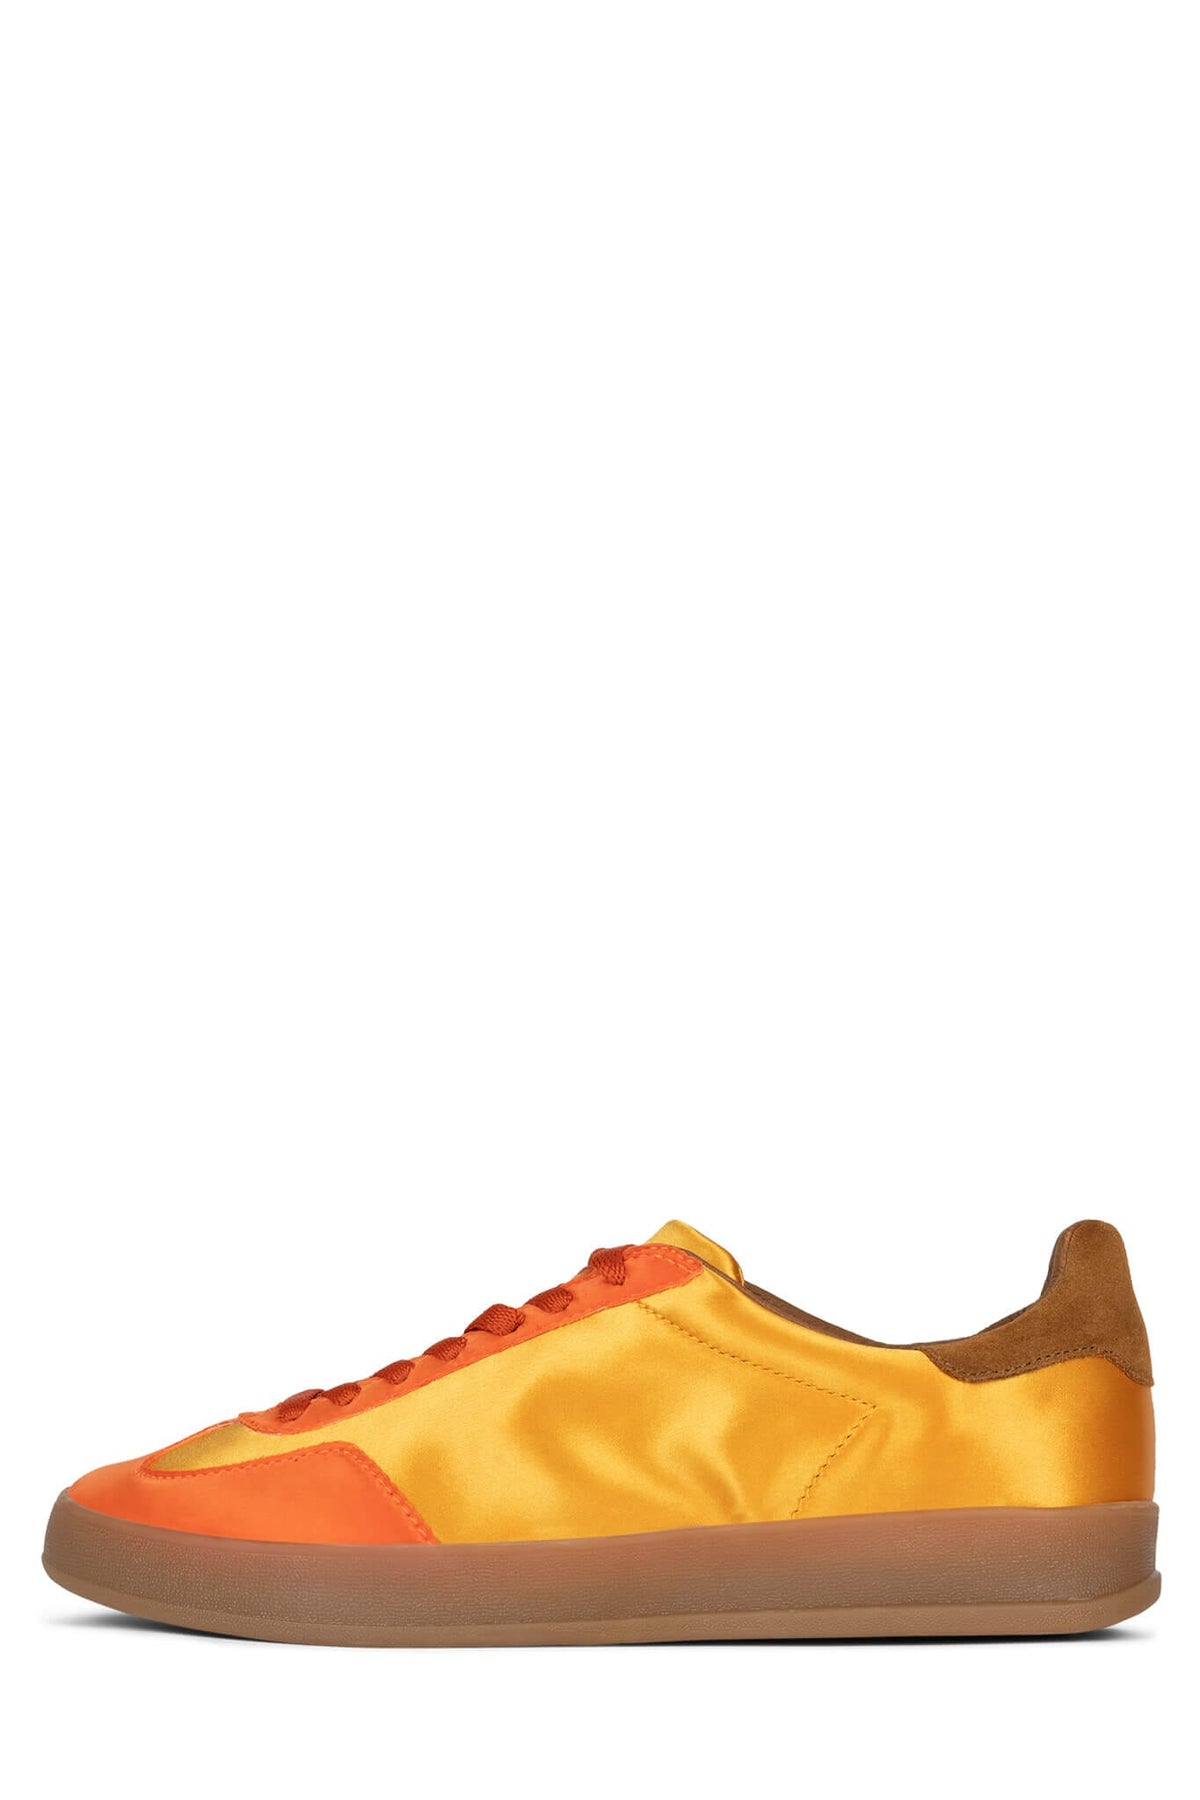 KEYS Sneaker VN Yellow Orange Satin 6 